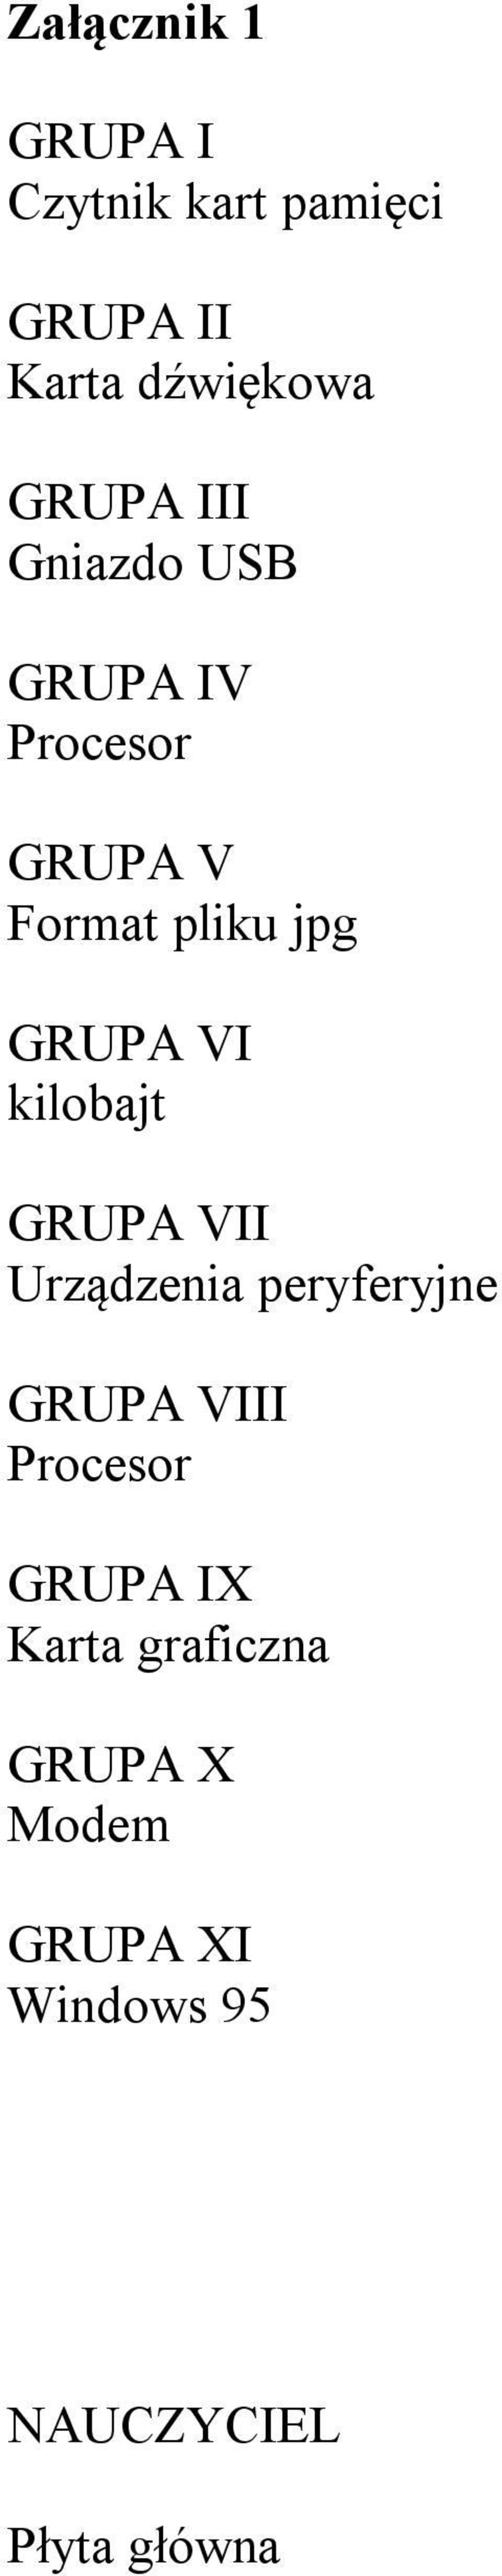 VI kilobajt GRUPA VII Urządzenia peryferyjne GRUPA VIII Procesor GRUPA